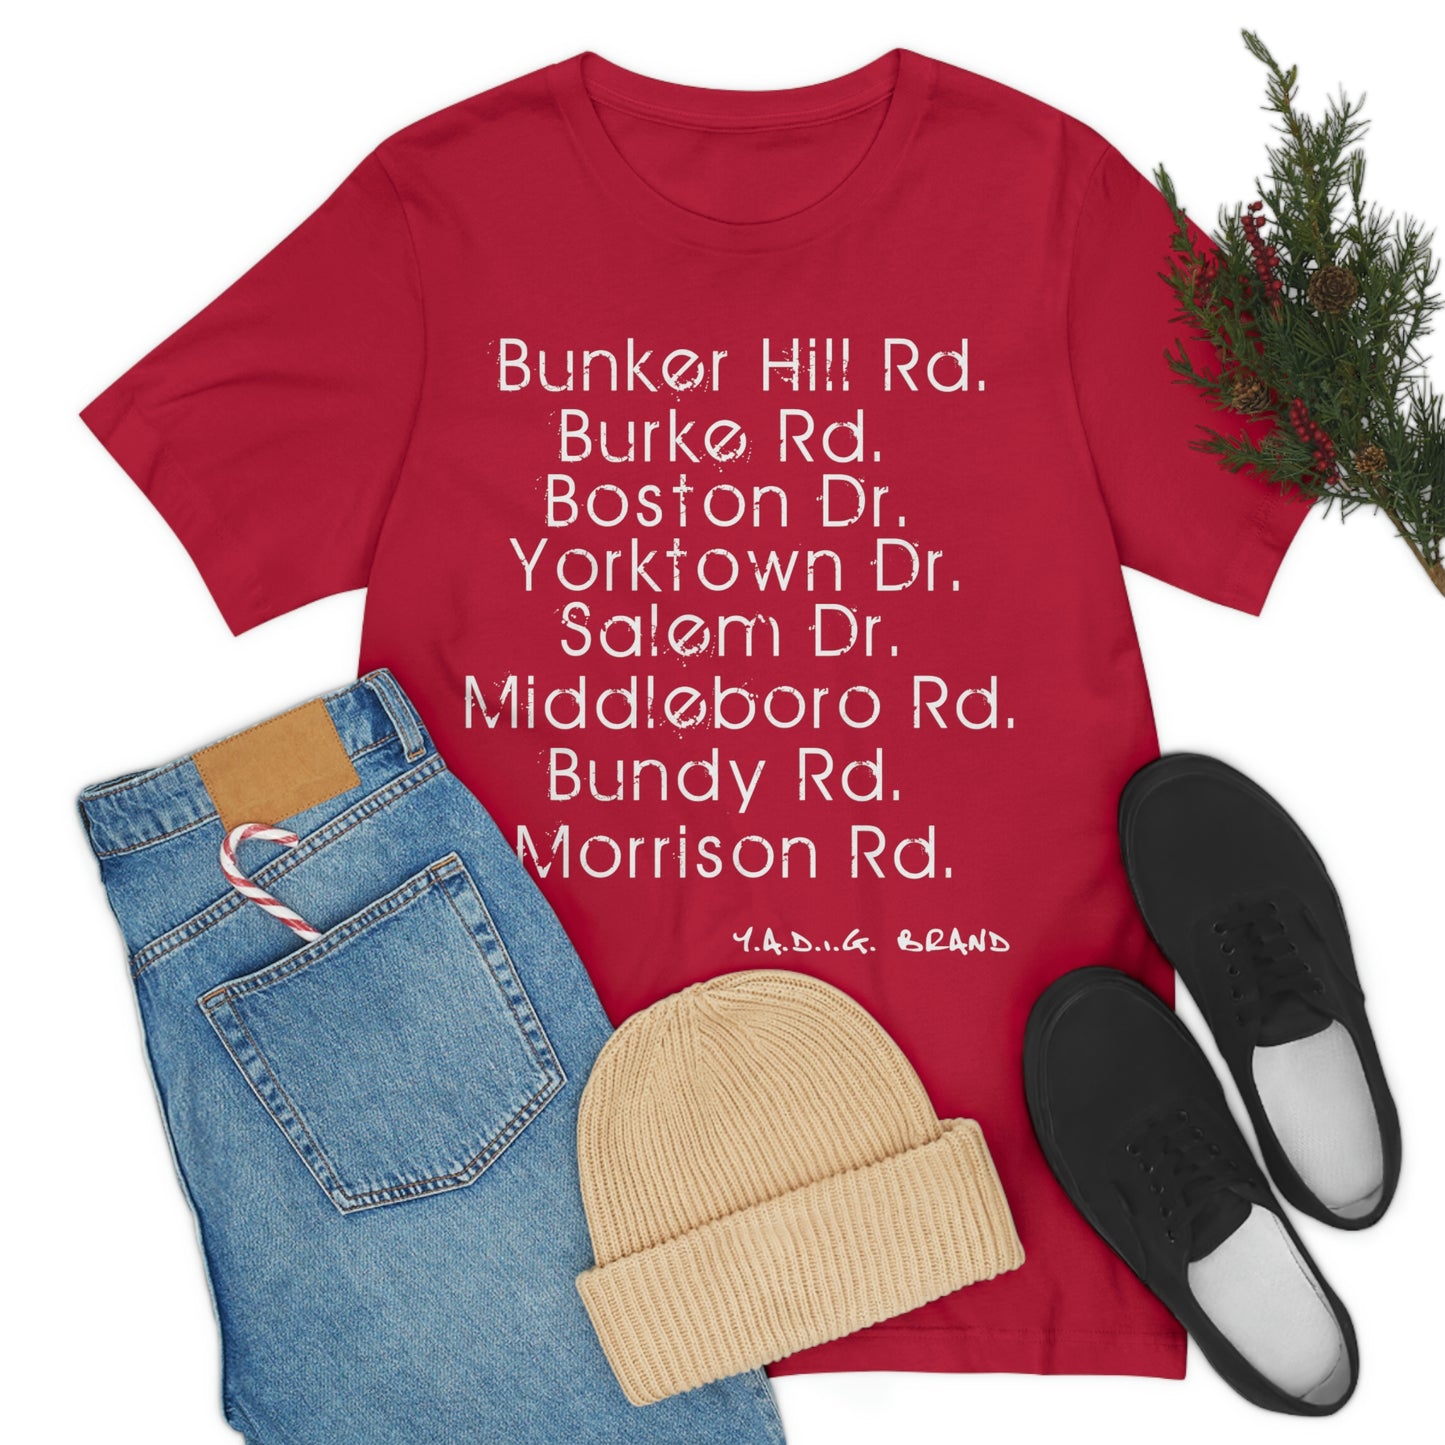 Bunker Hill 2nd Edition T-Shirt